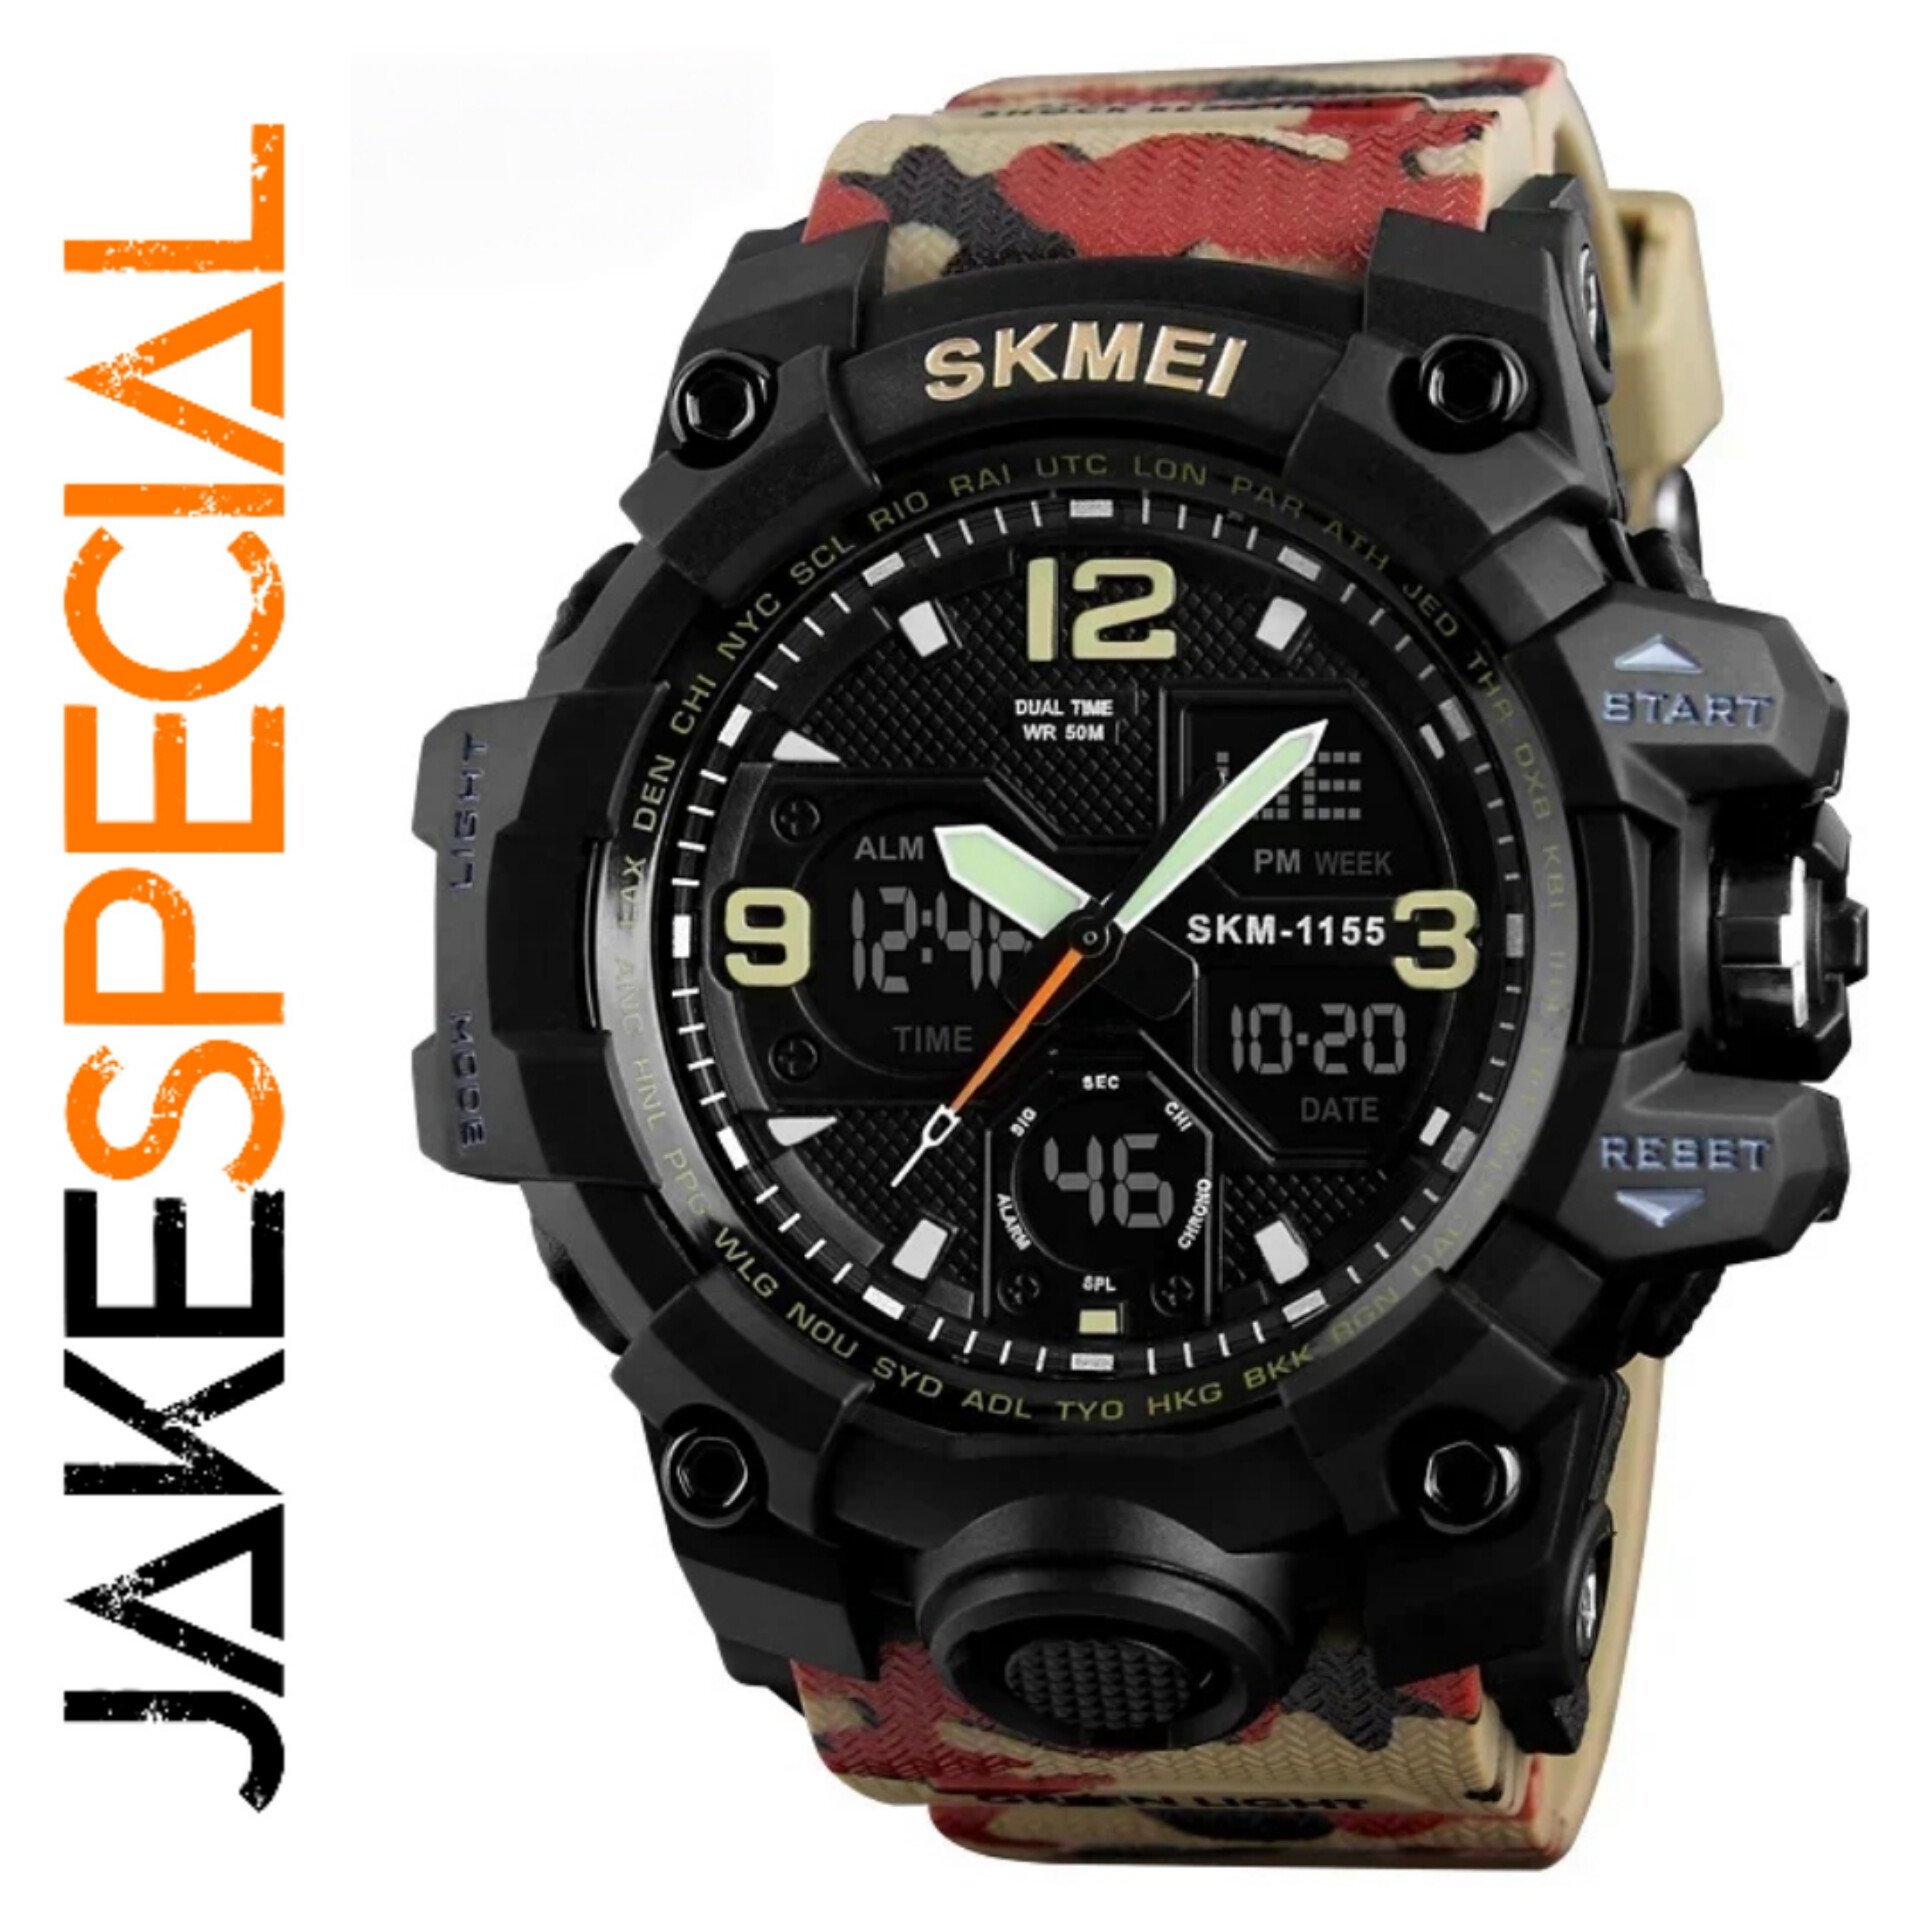 SKMEI 1155B Jungle Camo Sports Watch - Adventure Ready, Inspired by G-Shock M...